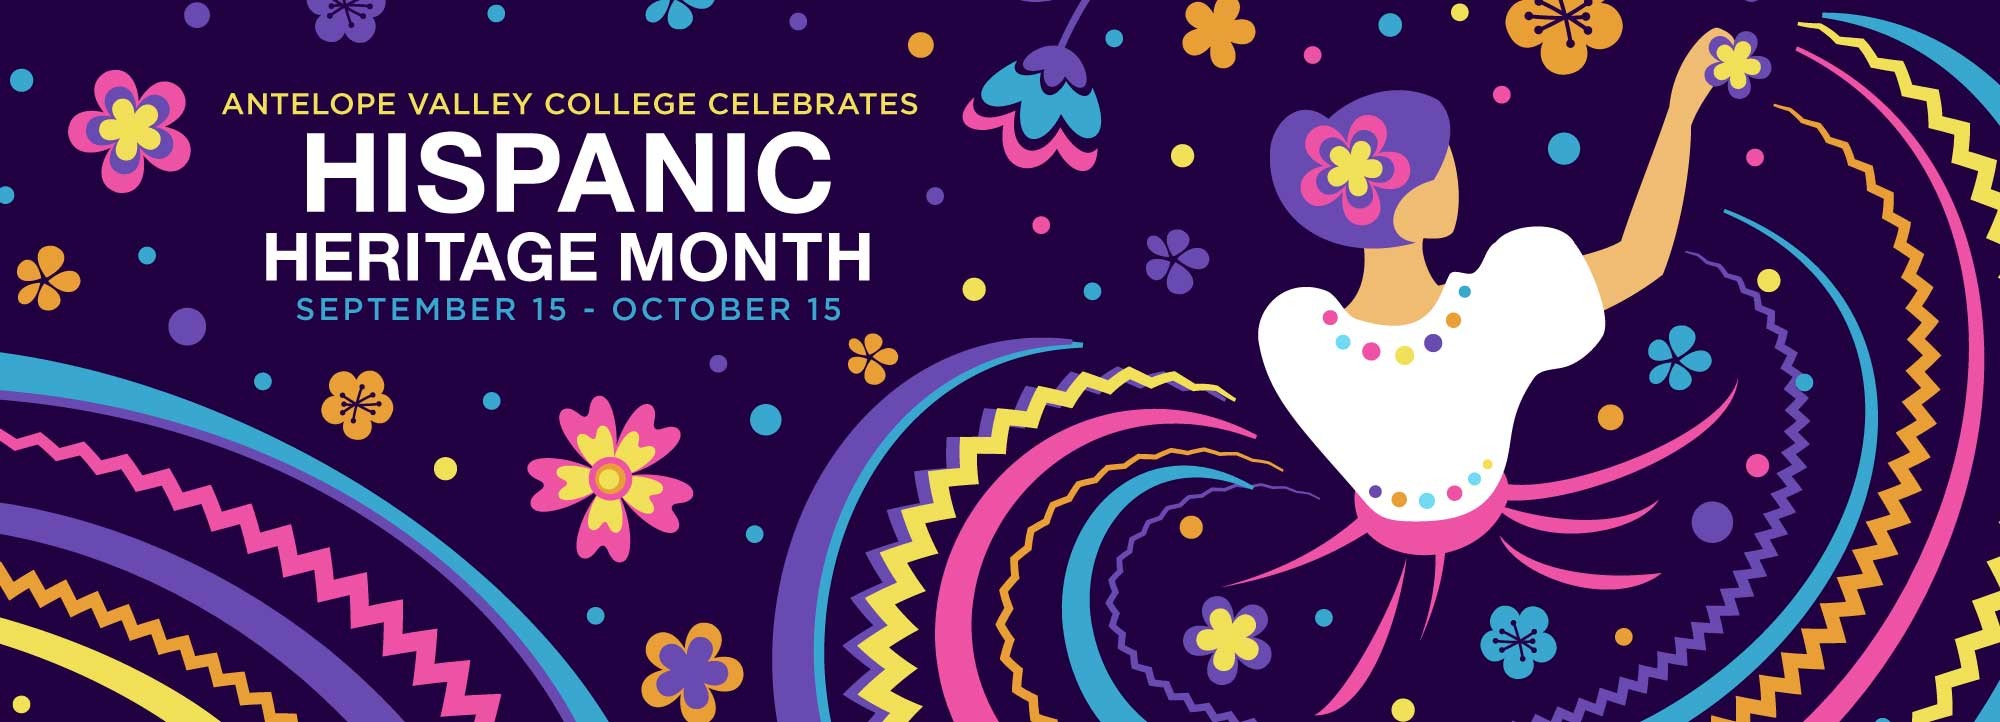 Antelope Valley College celebrates Hispanic Heritage Month